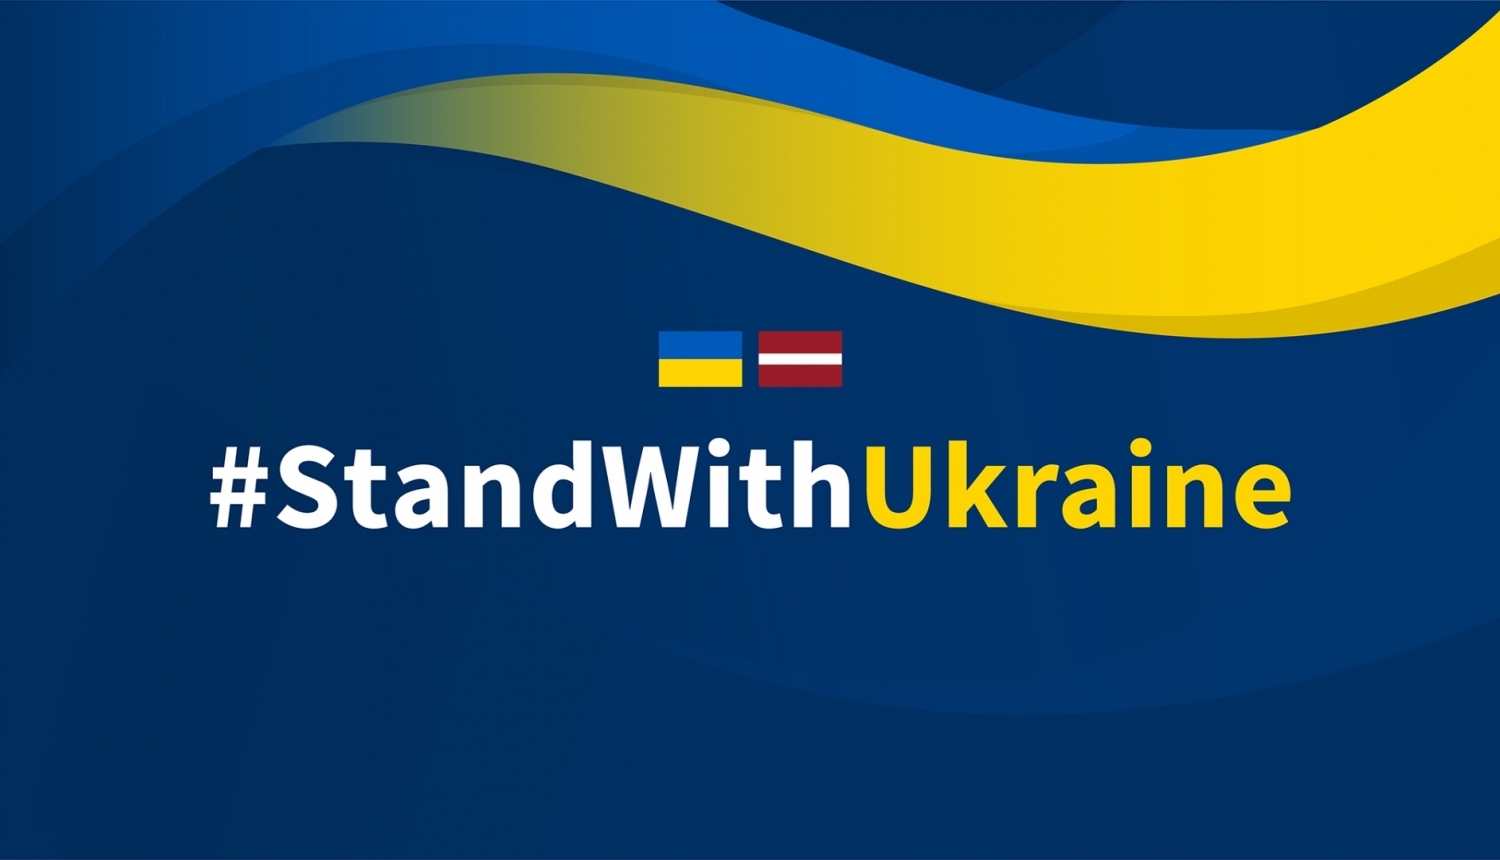 Standwith Ukraine